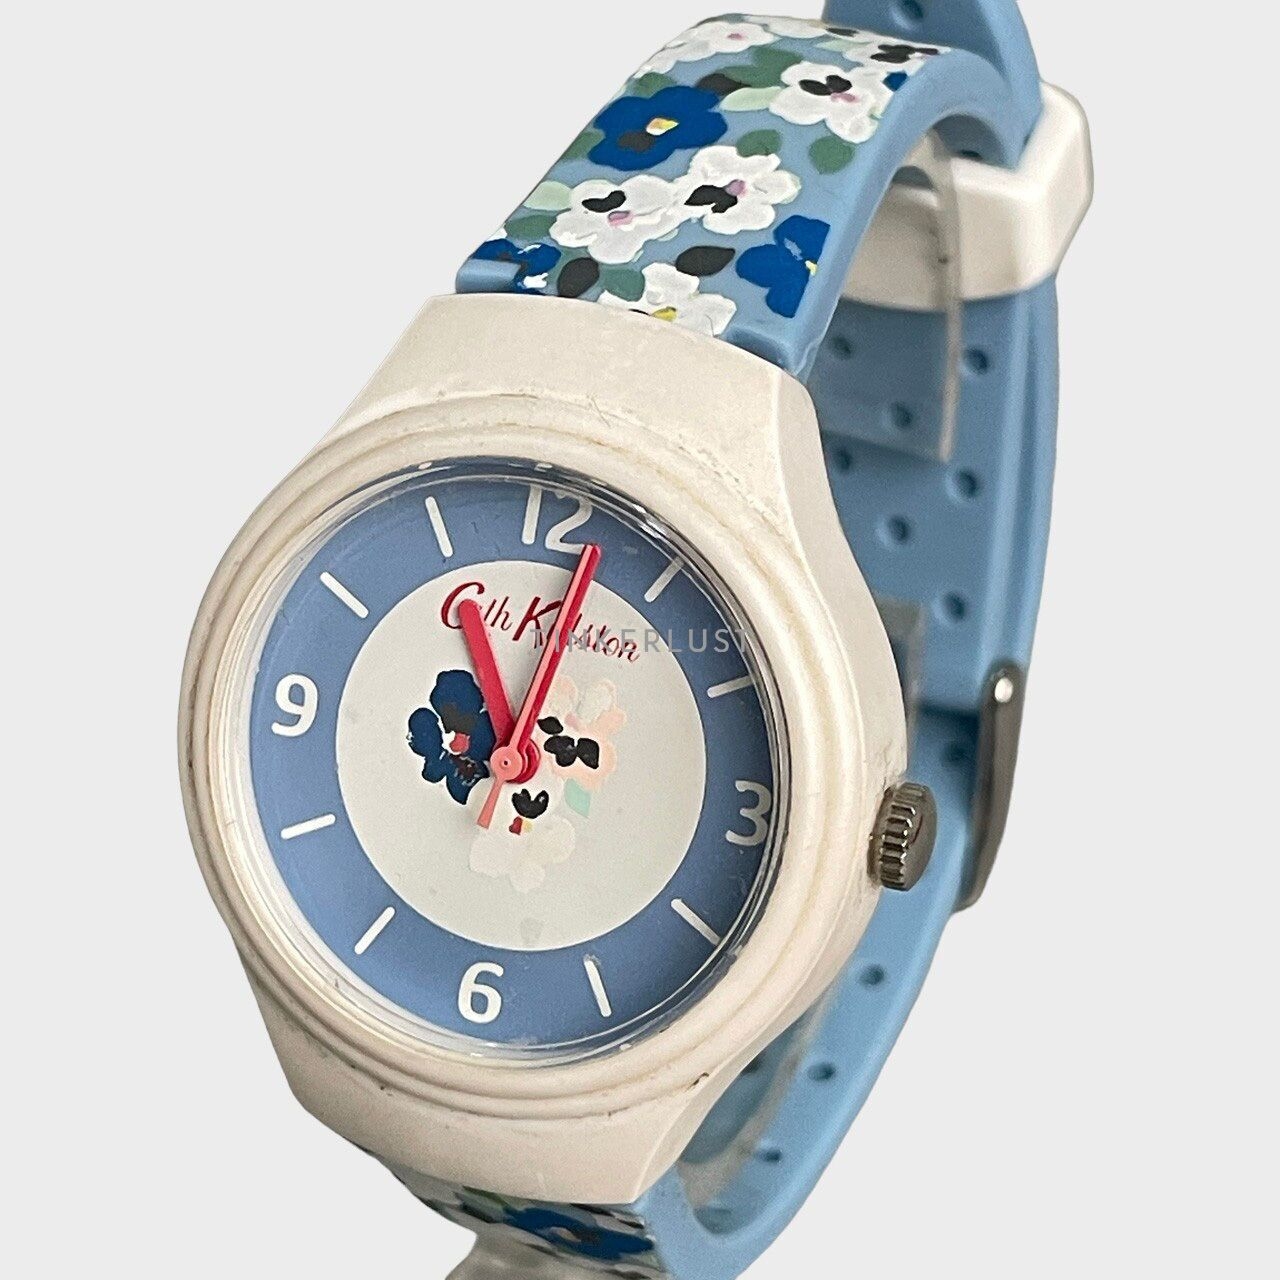 Cath Kidston Blue & White Floral Watch